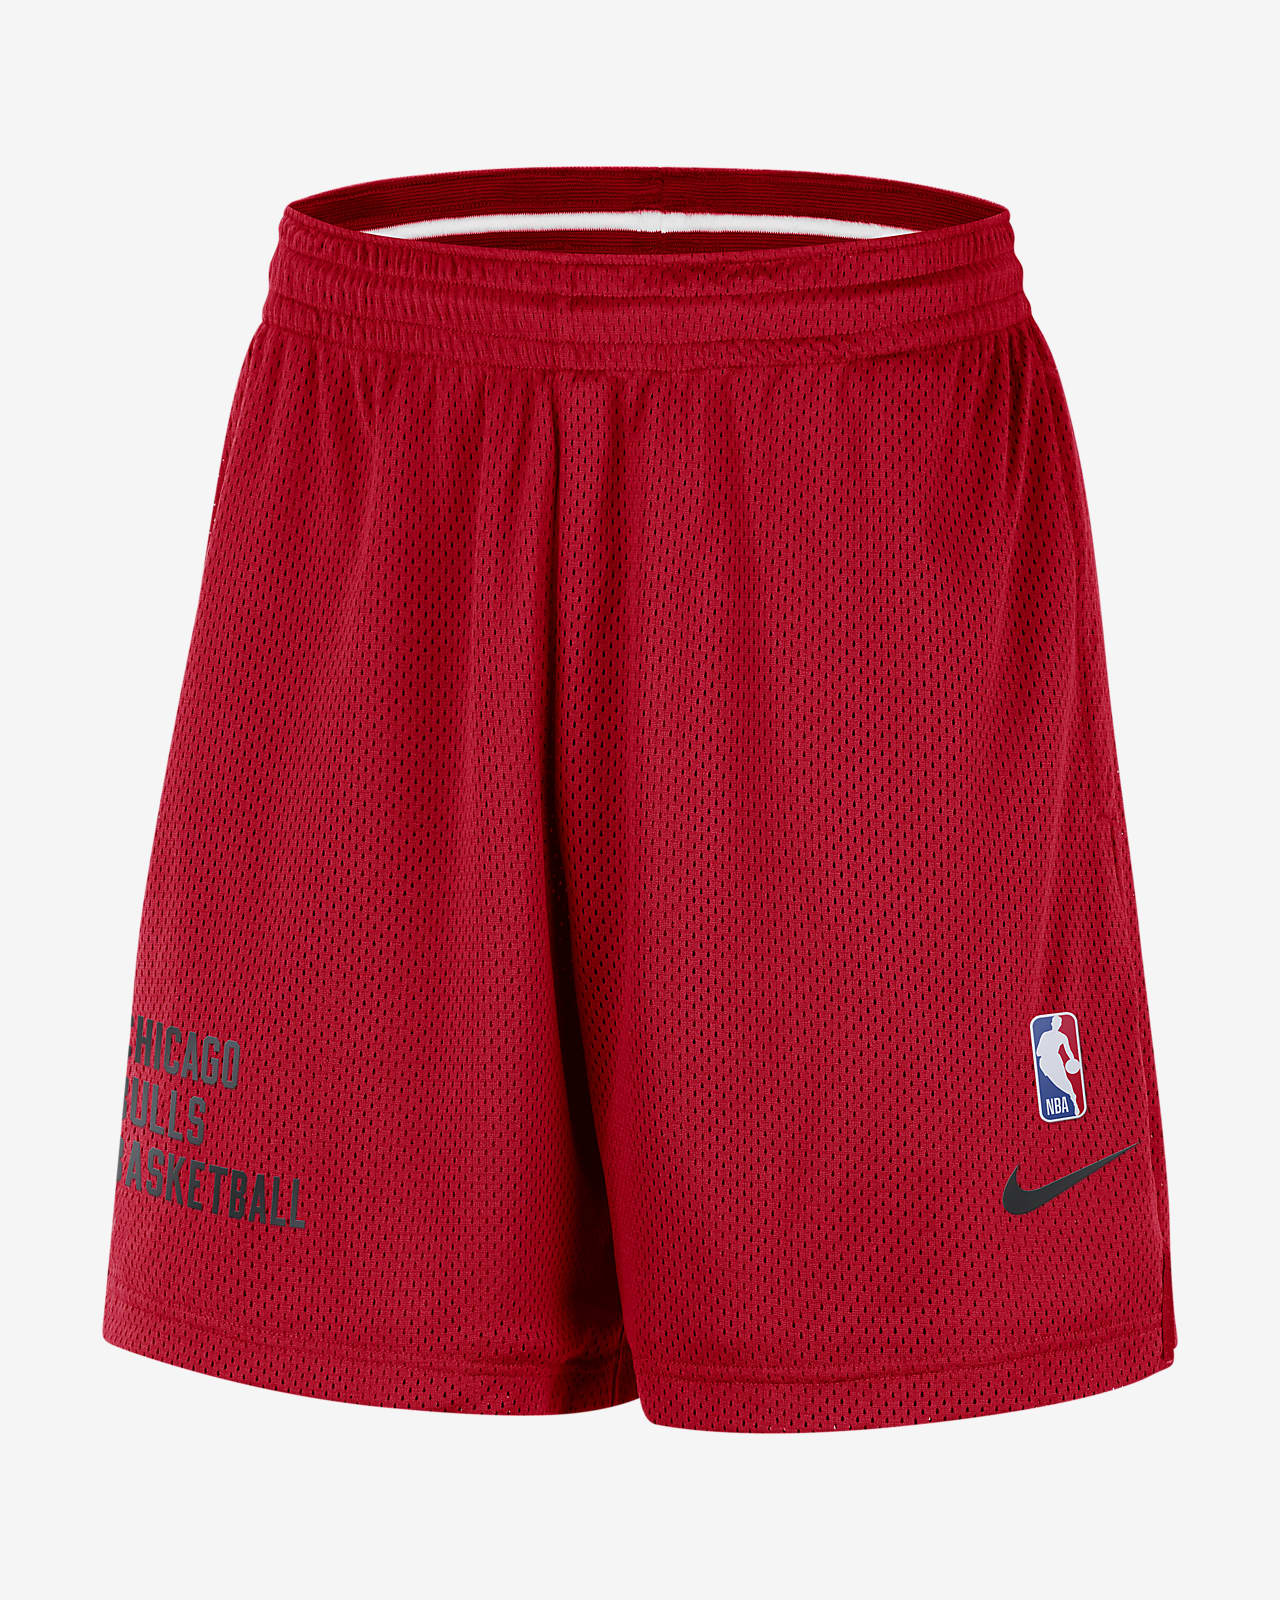 Chicago Bulls Men's Nike NBA Mesh Shorts